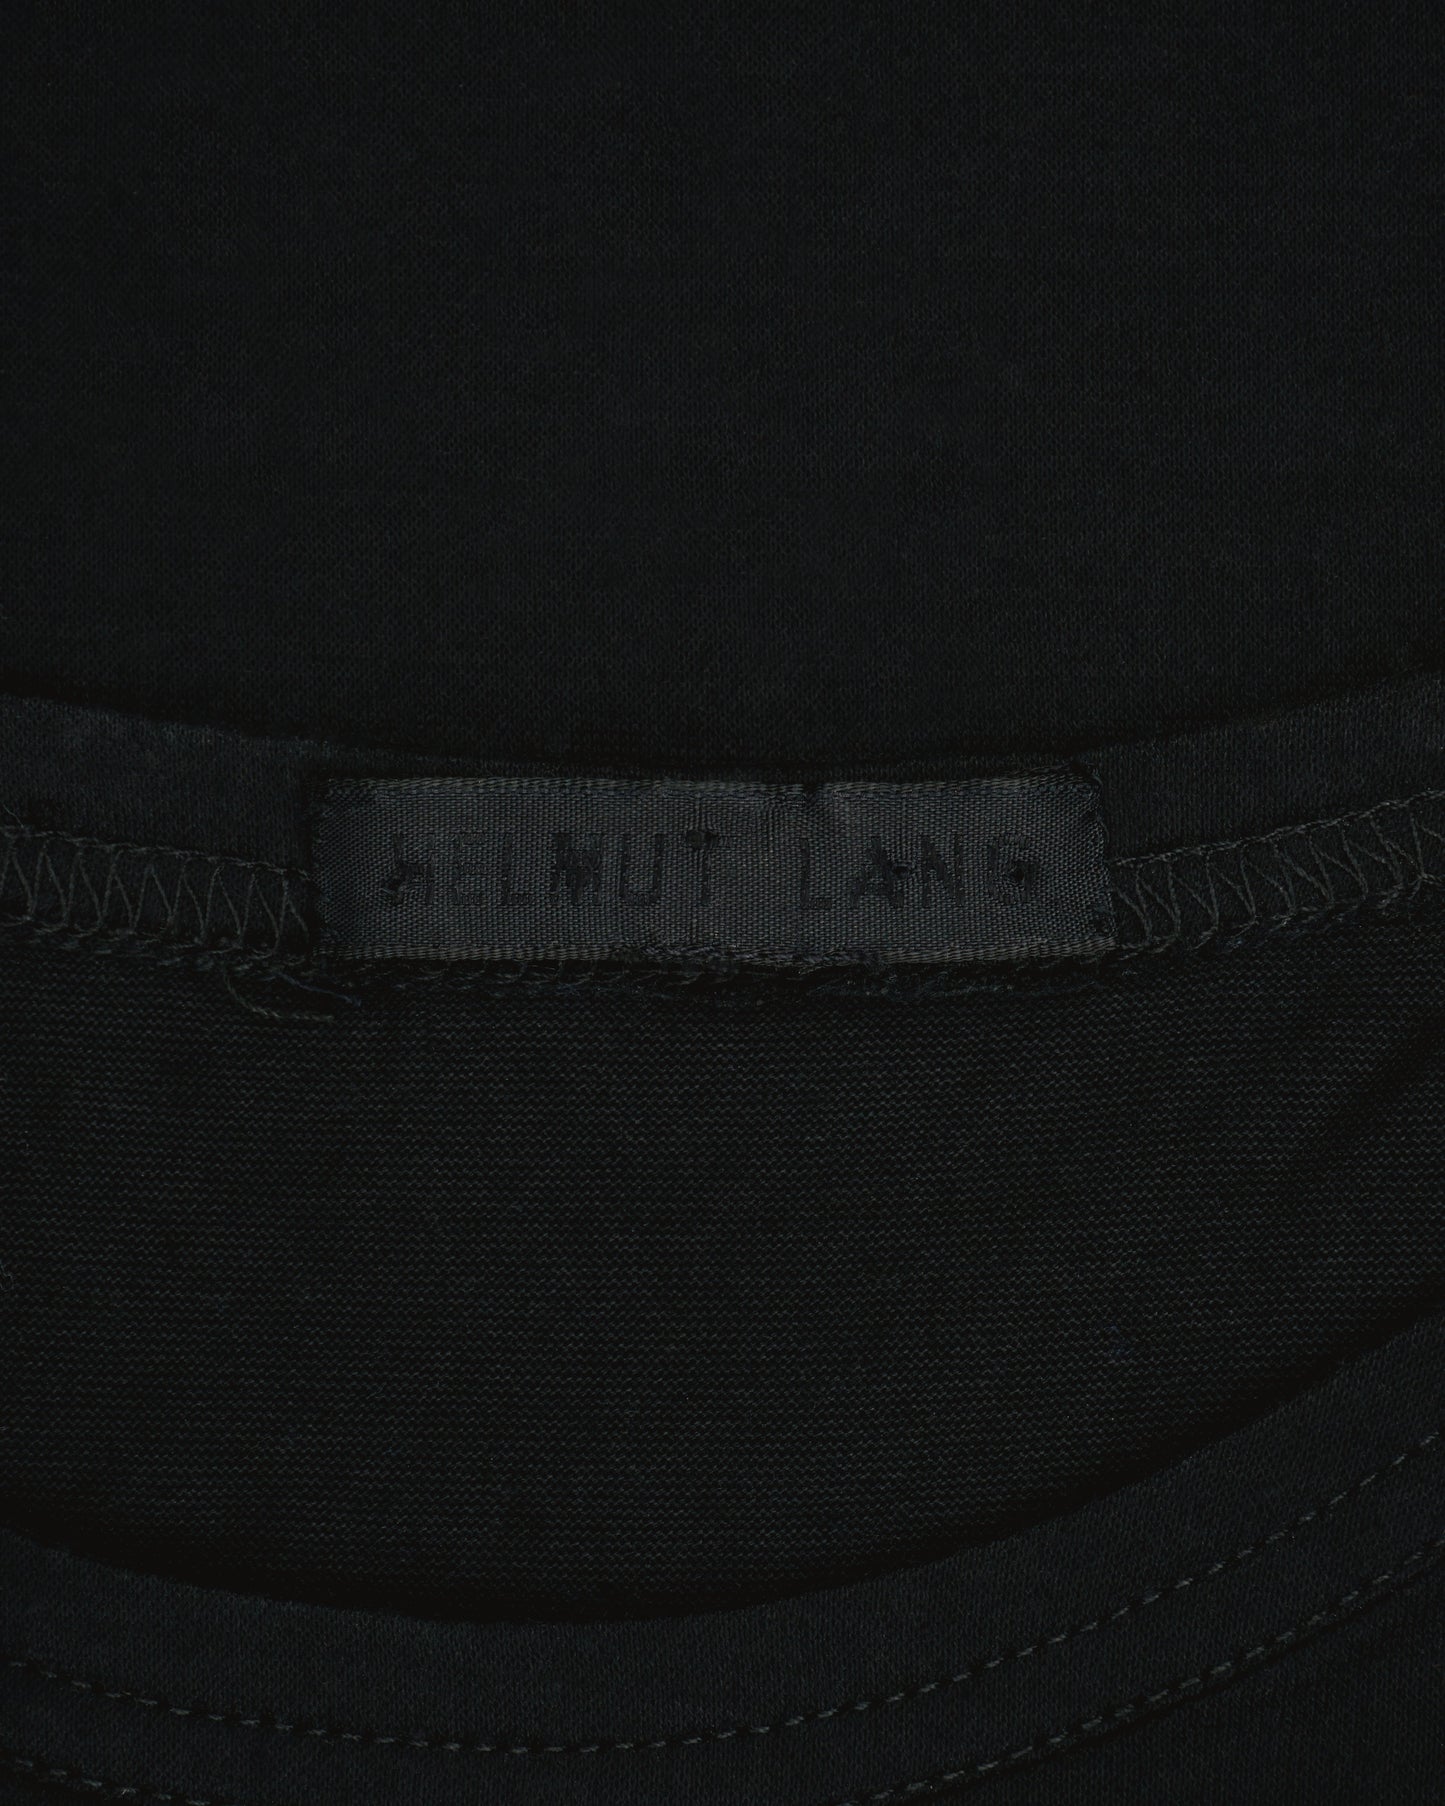 Helmut Lang AW96 Bondage Elbow-Slit Dress